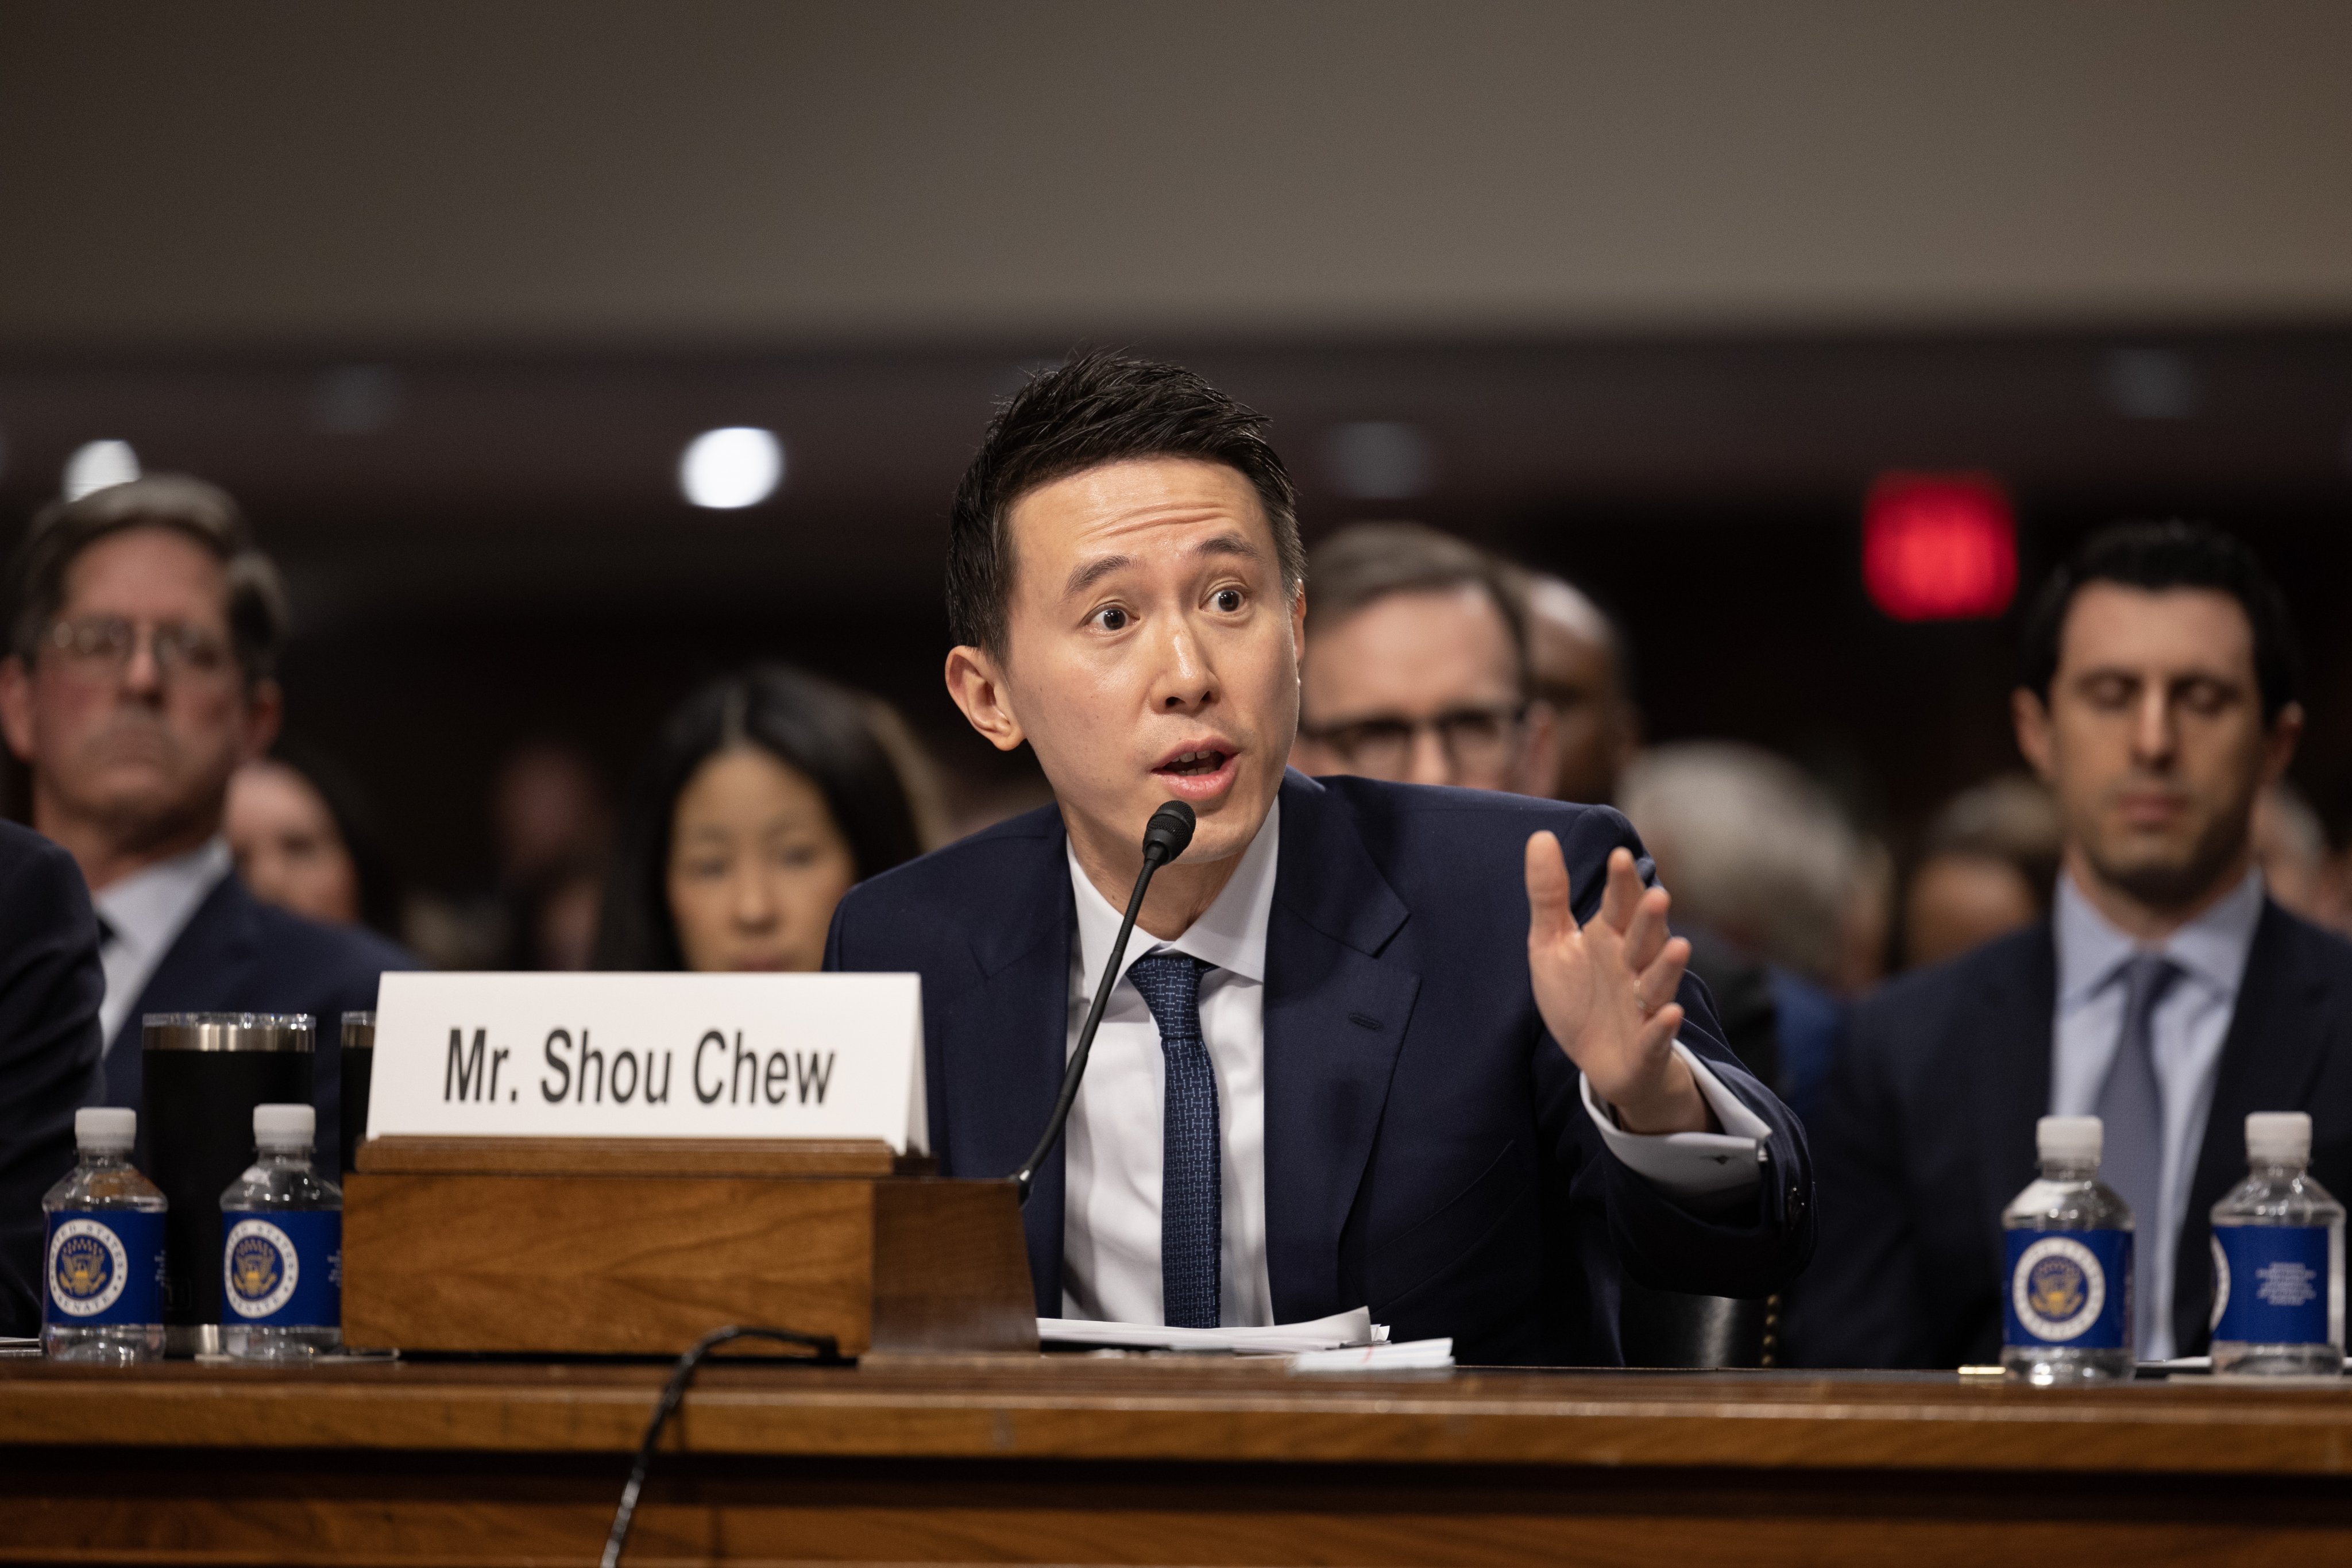 TikTok CEO Chew Shou Zi testifies before a US Senate Judiciary Committee hearing on protecting children from sexual exploitation online, in Washington, DC, on January 31. Photo: EPA-EFE